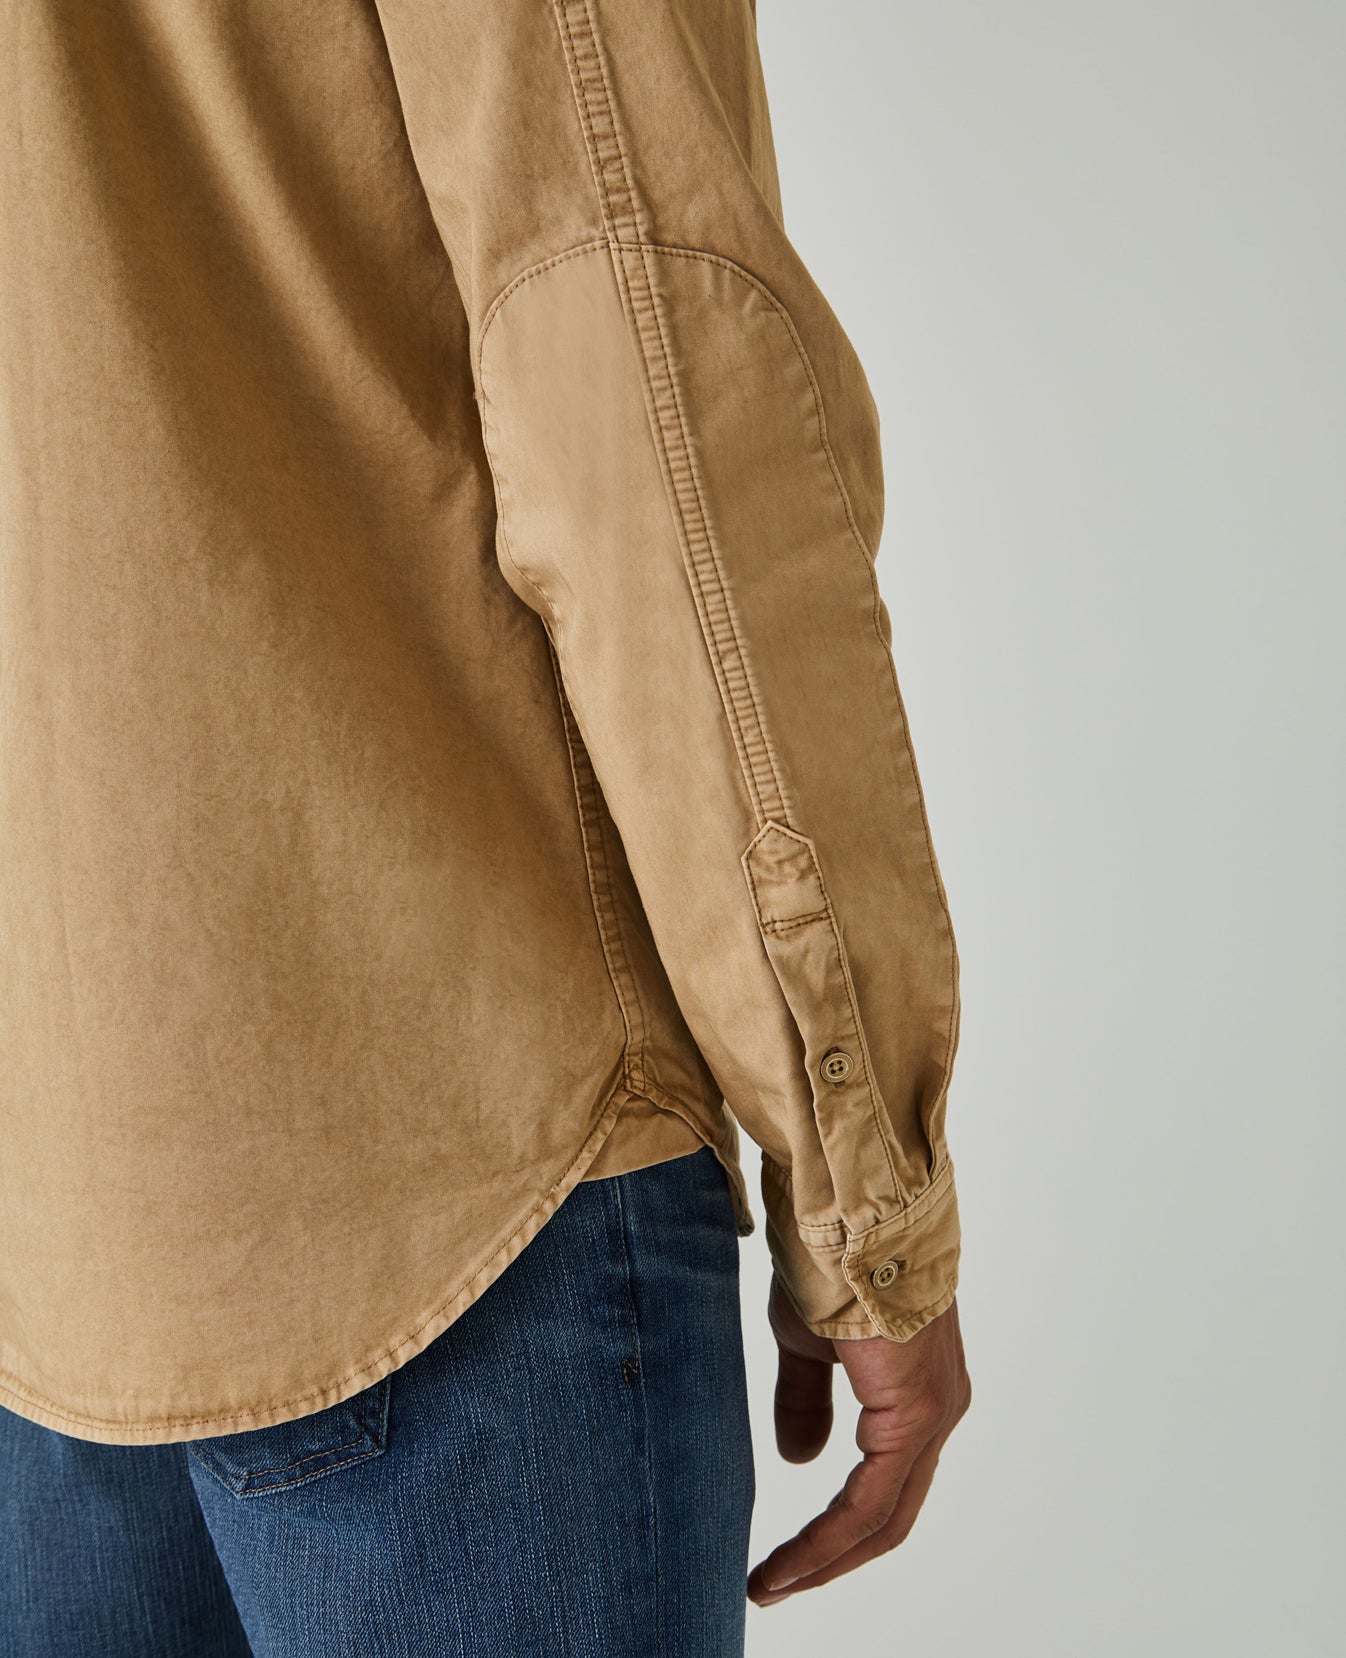 Benning Sleeve Patch Shirt Sulfur Sandy Pail Long Sleeve Shirt Men Tops Photo 4